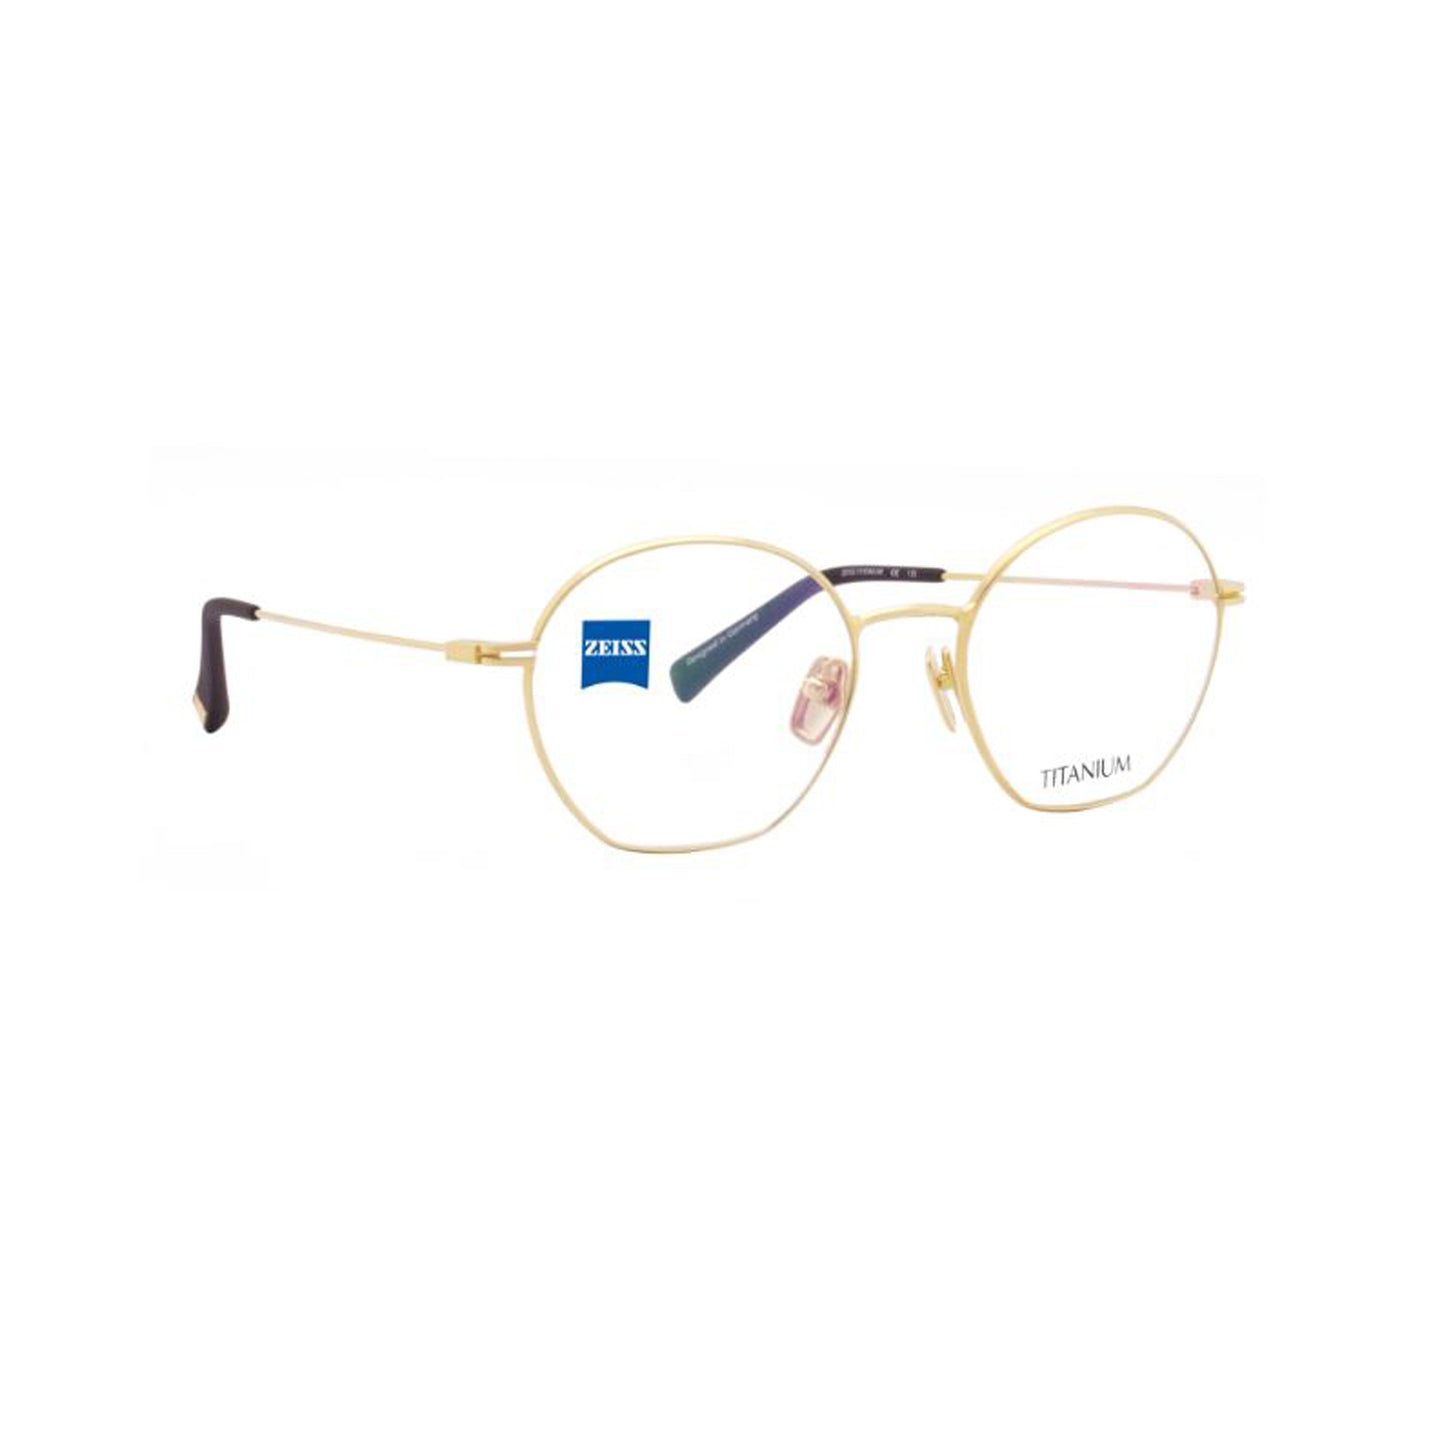 Zeiss Eyewear Gold Round Metal Full Rim Eyeglasses. Made in Germany ZS40034-Y22